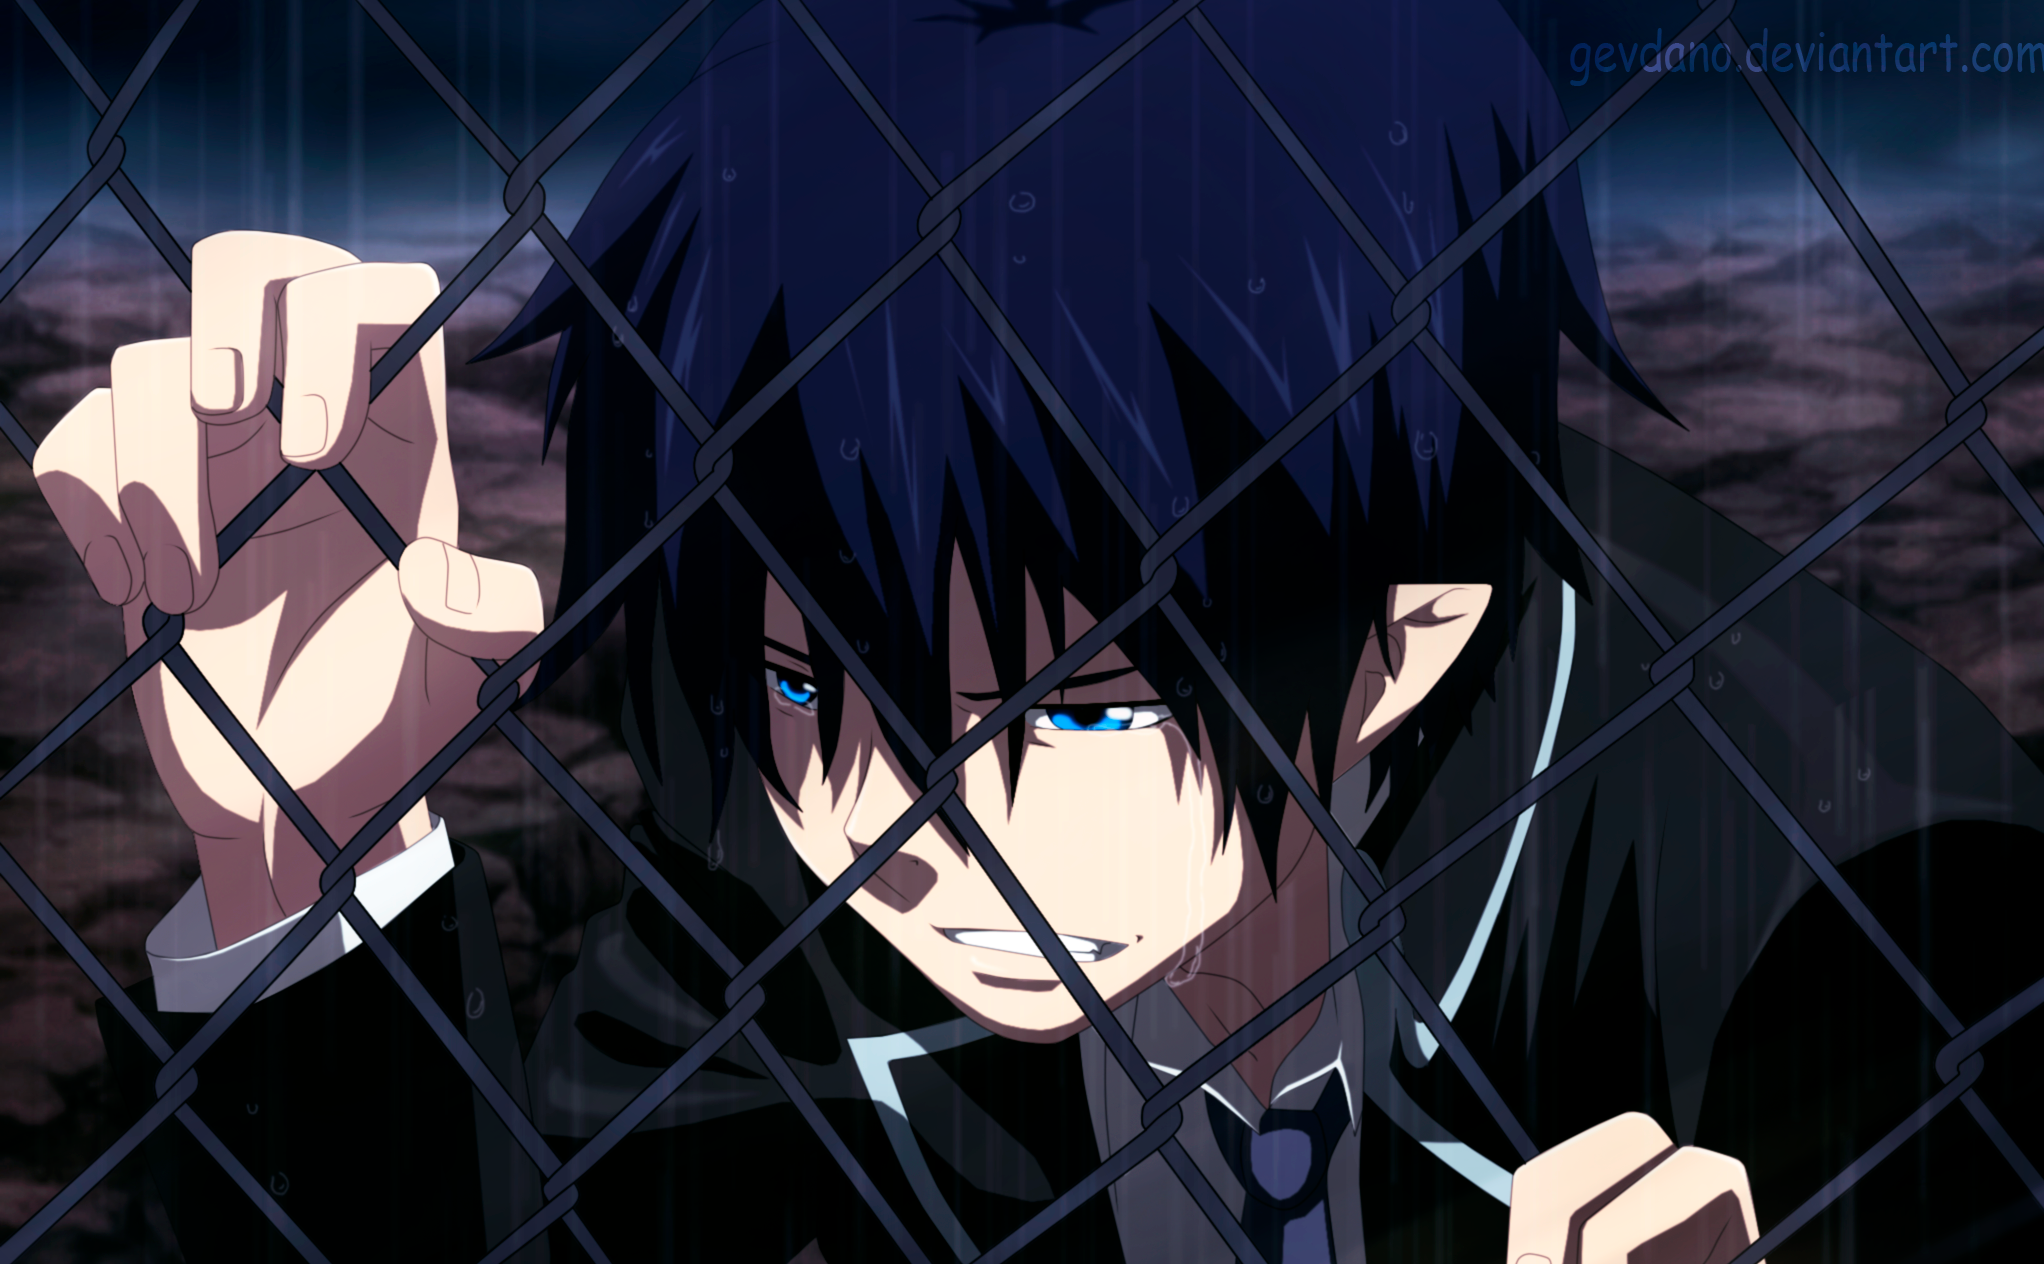 Anime Blue Exorcist HD Wallpaper | Background Image